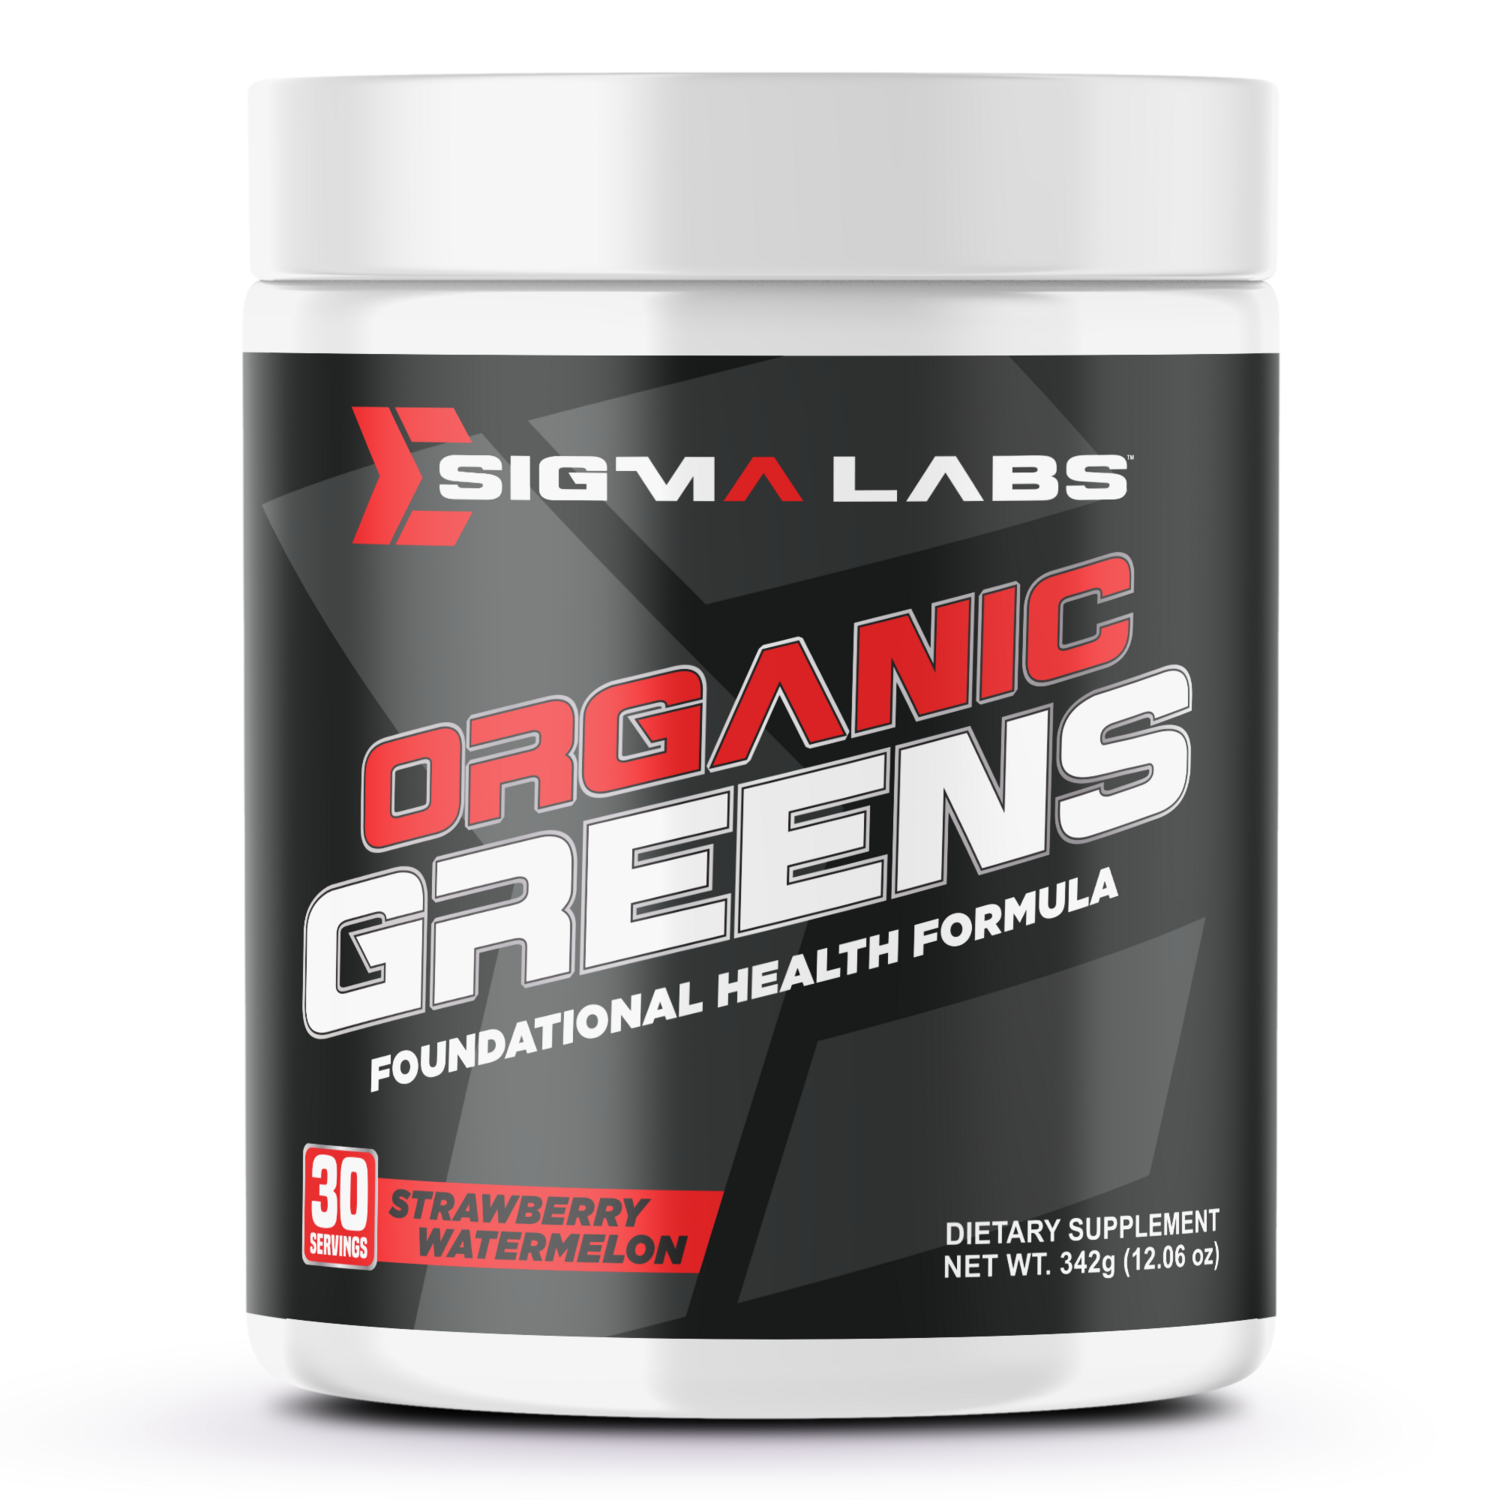 ORGANIC GREENS - Foundational Health Formula